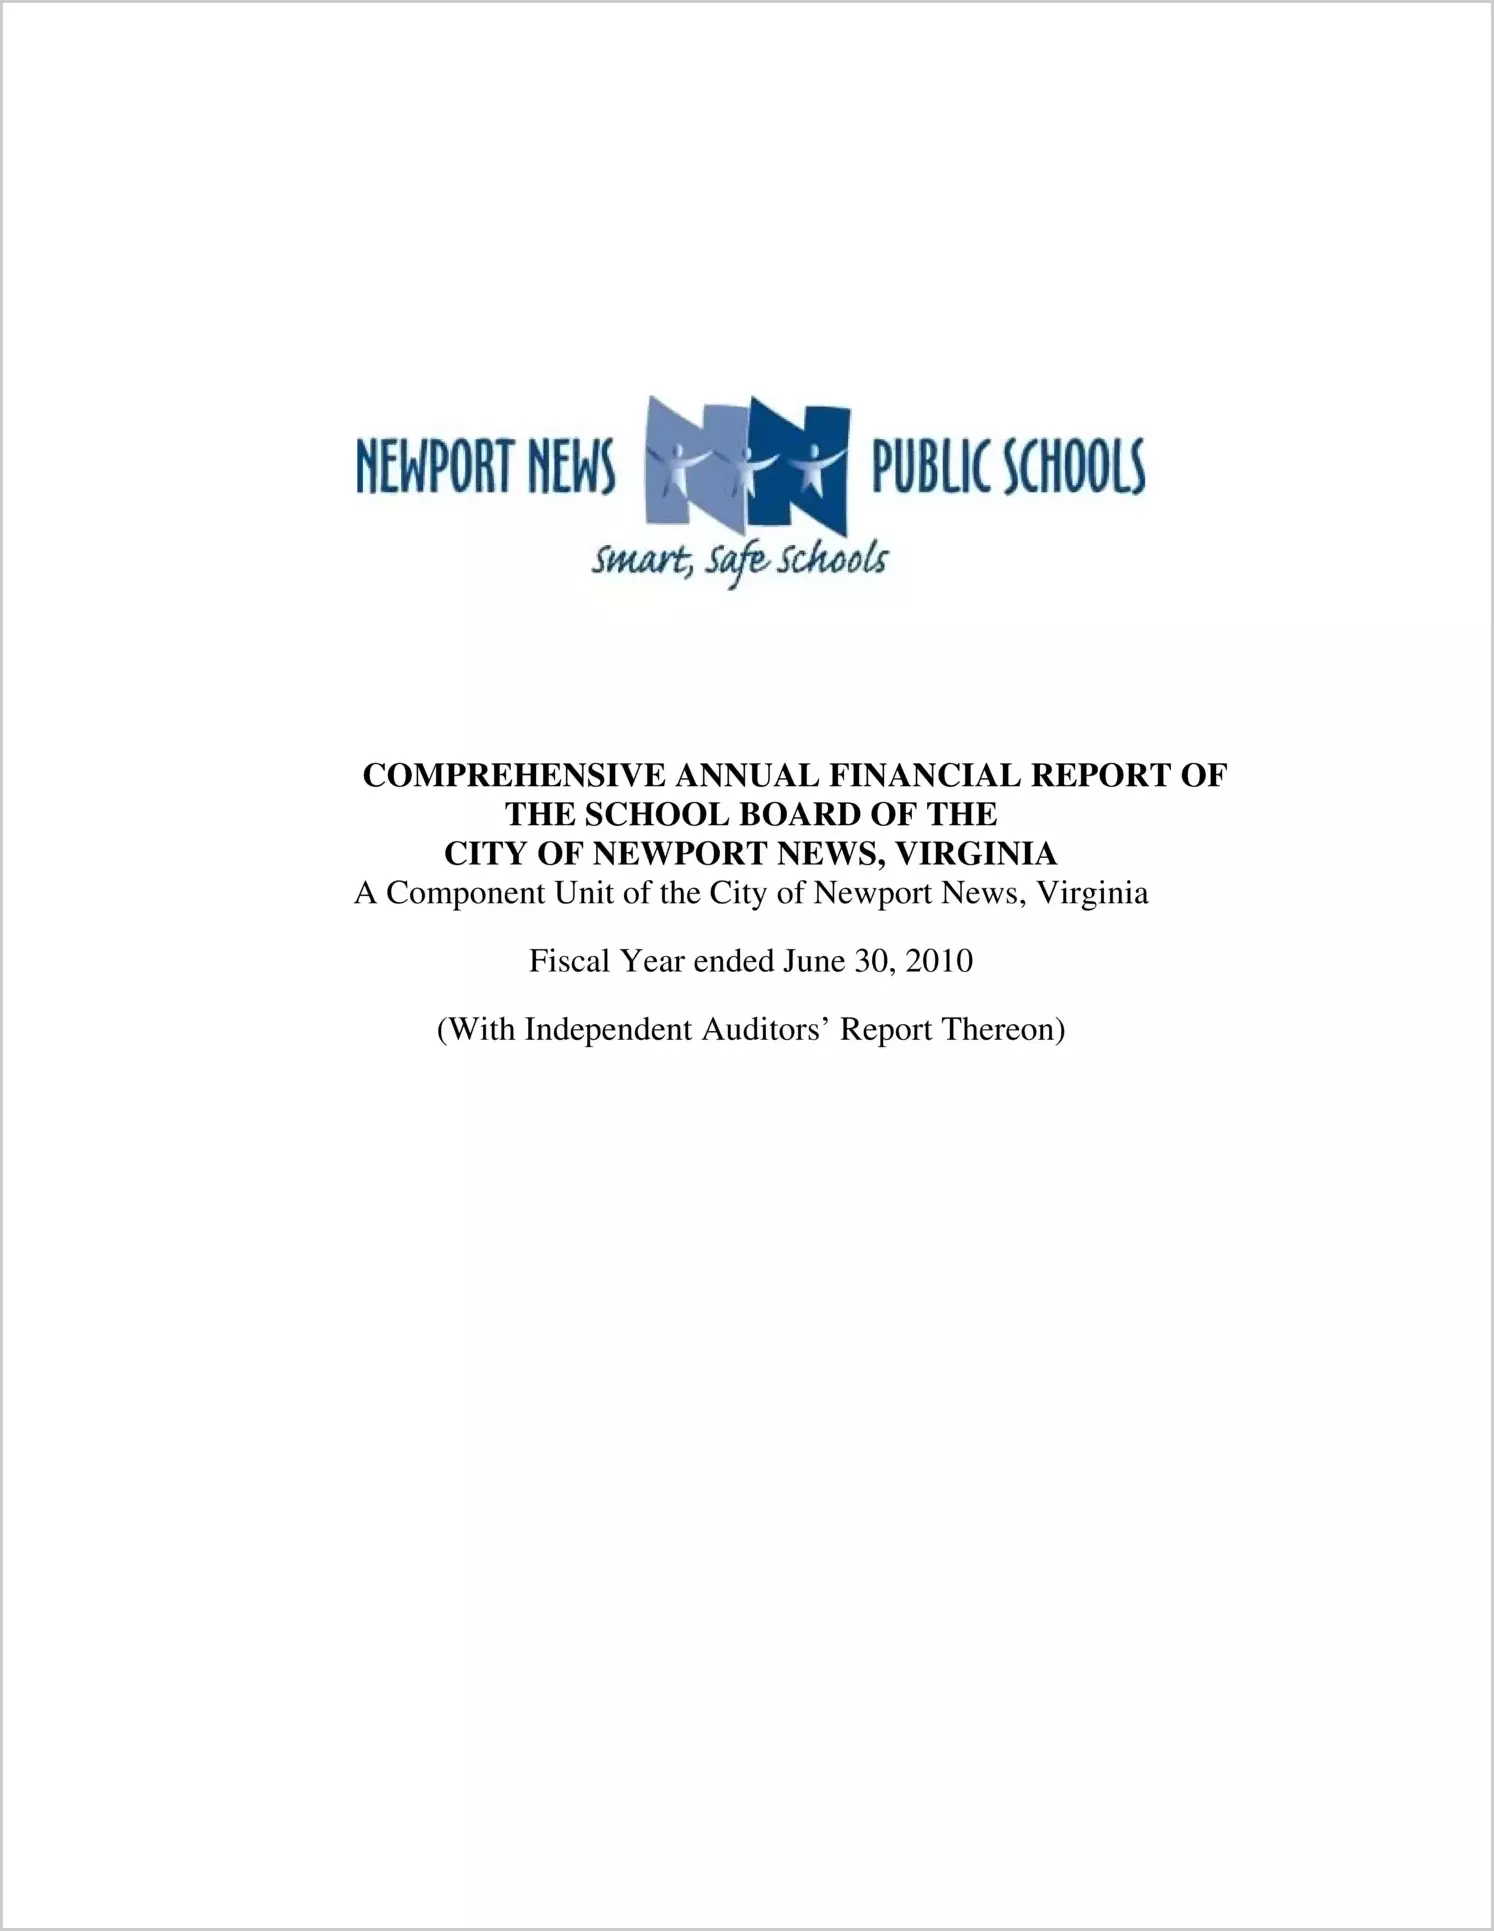 2010 Public Schools Annual Financial Report for City of Newport News